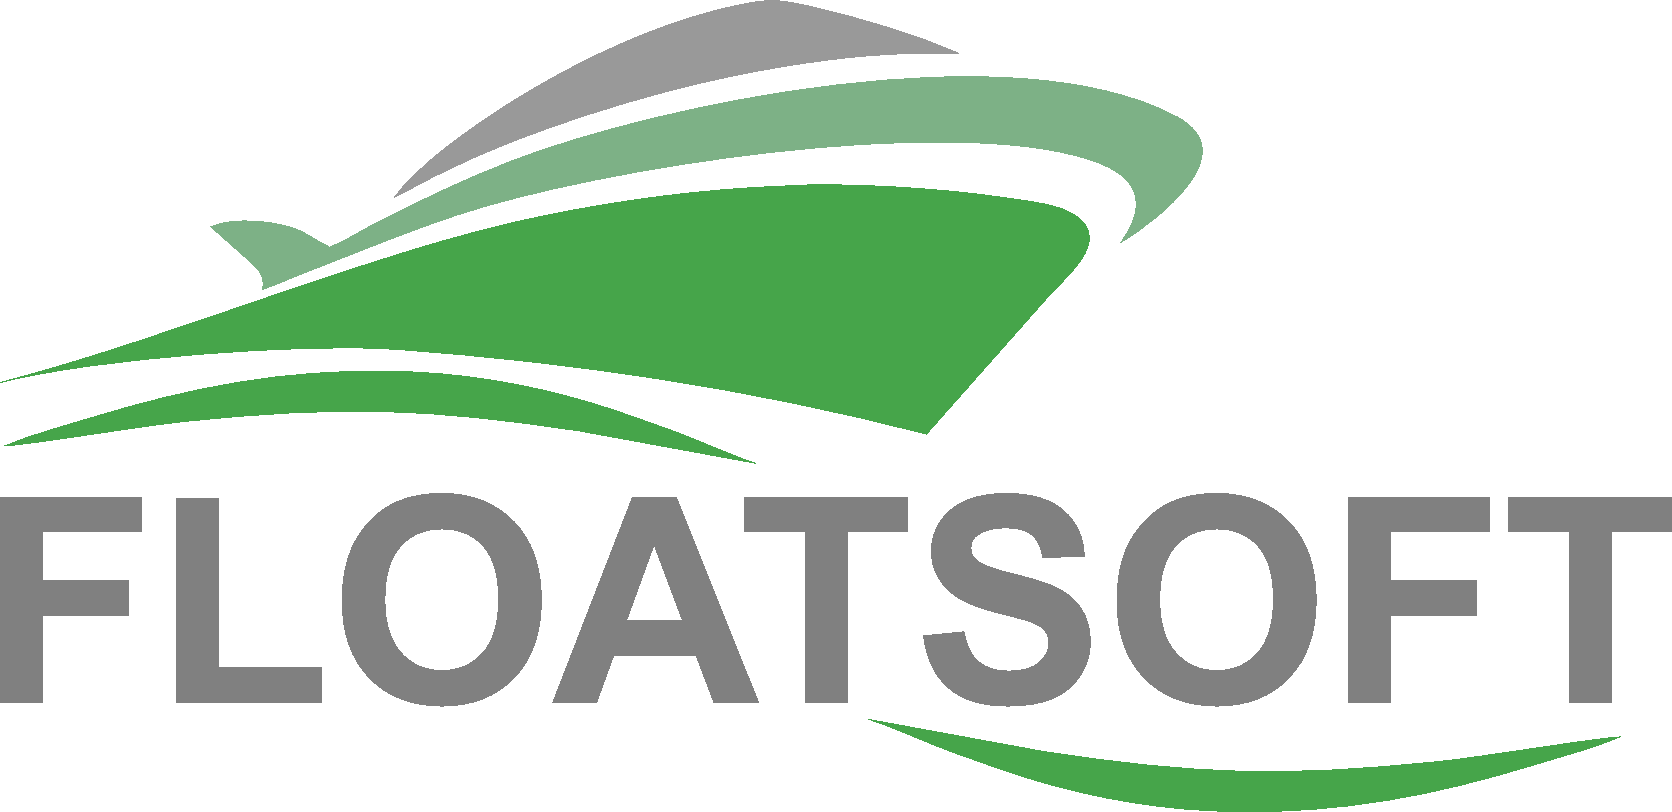 FloatSoft Logo